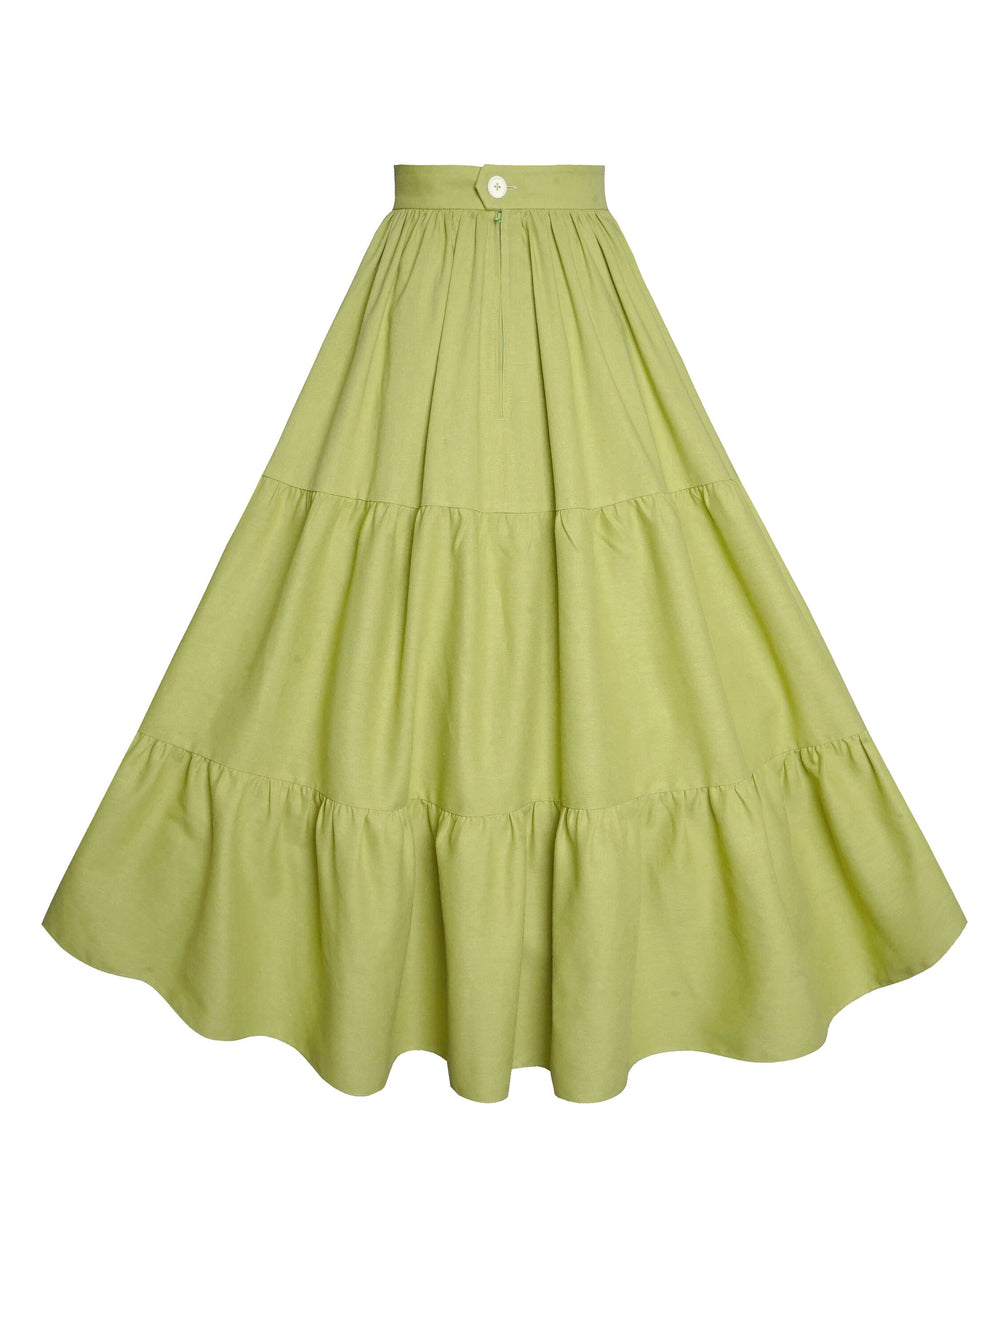 MTO - Pippa Skirt in Pistachio Green Linen